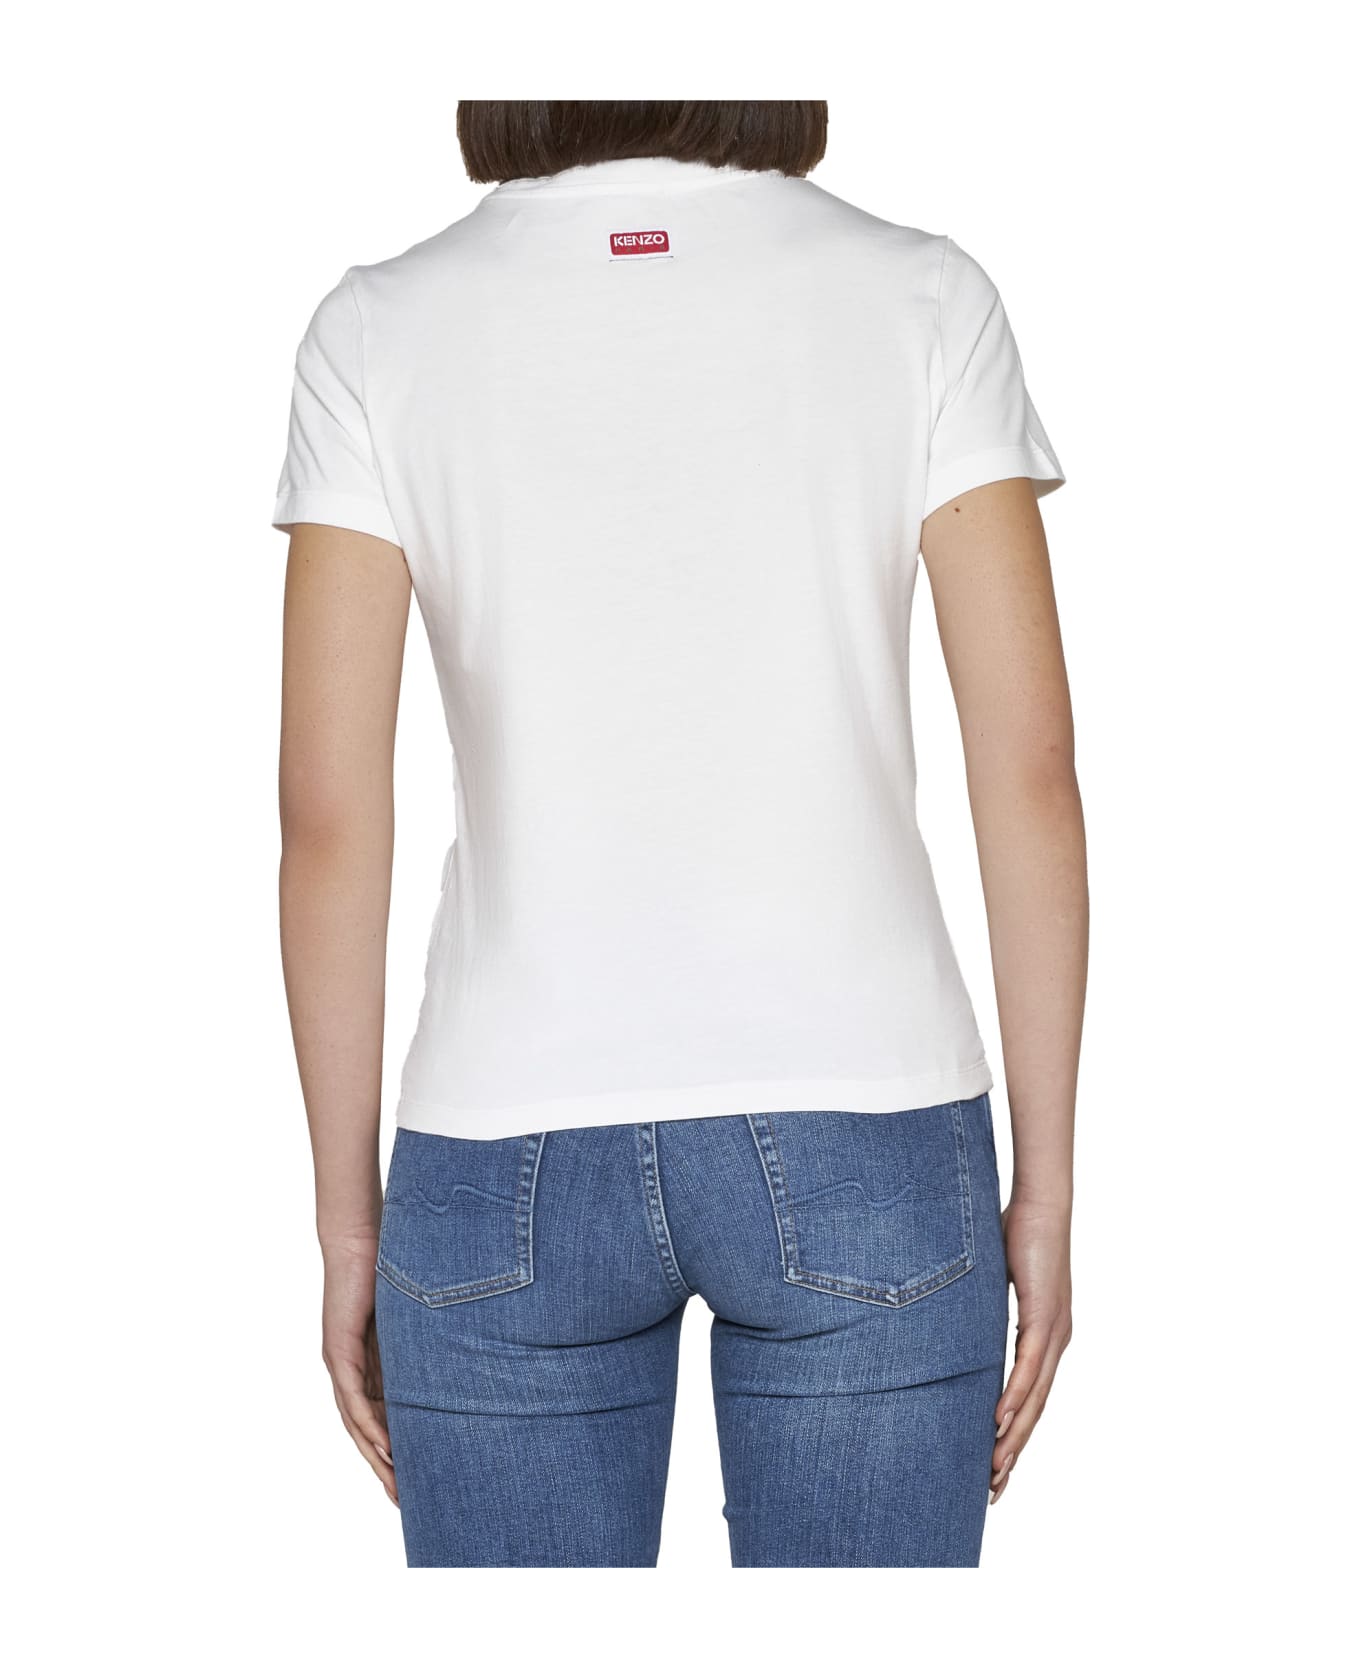 Kenzo Pixel T-shirt - White